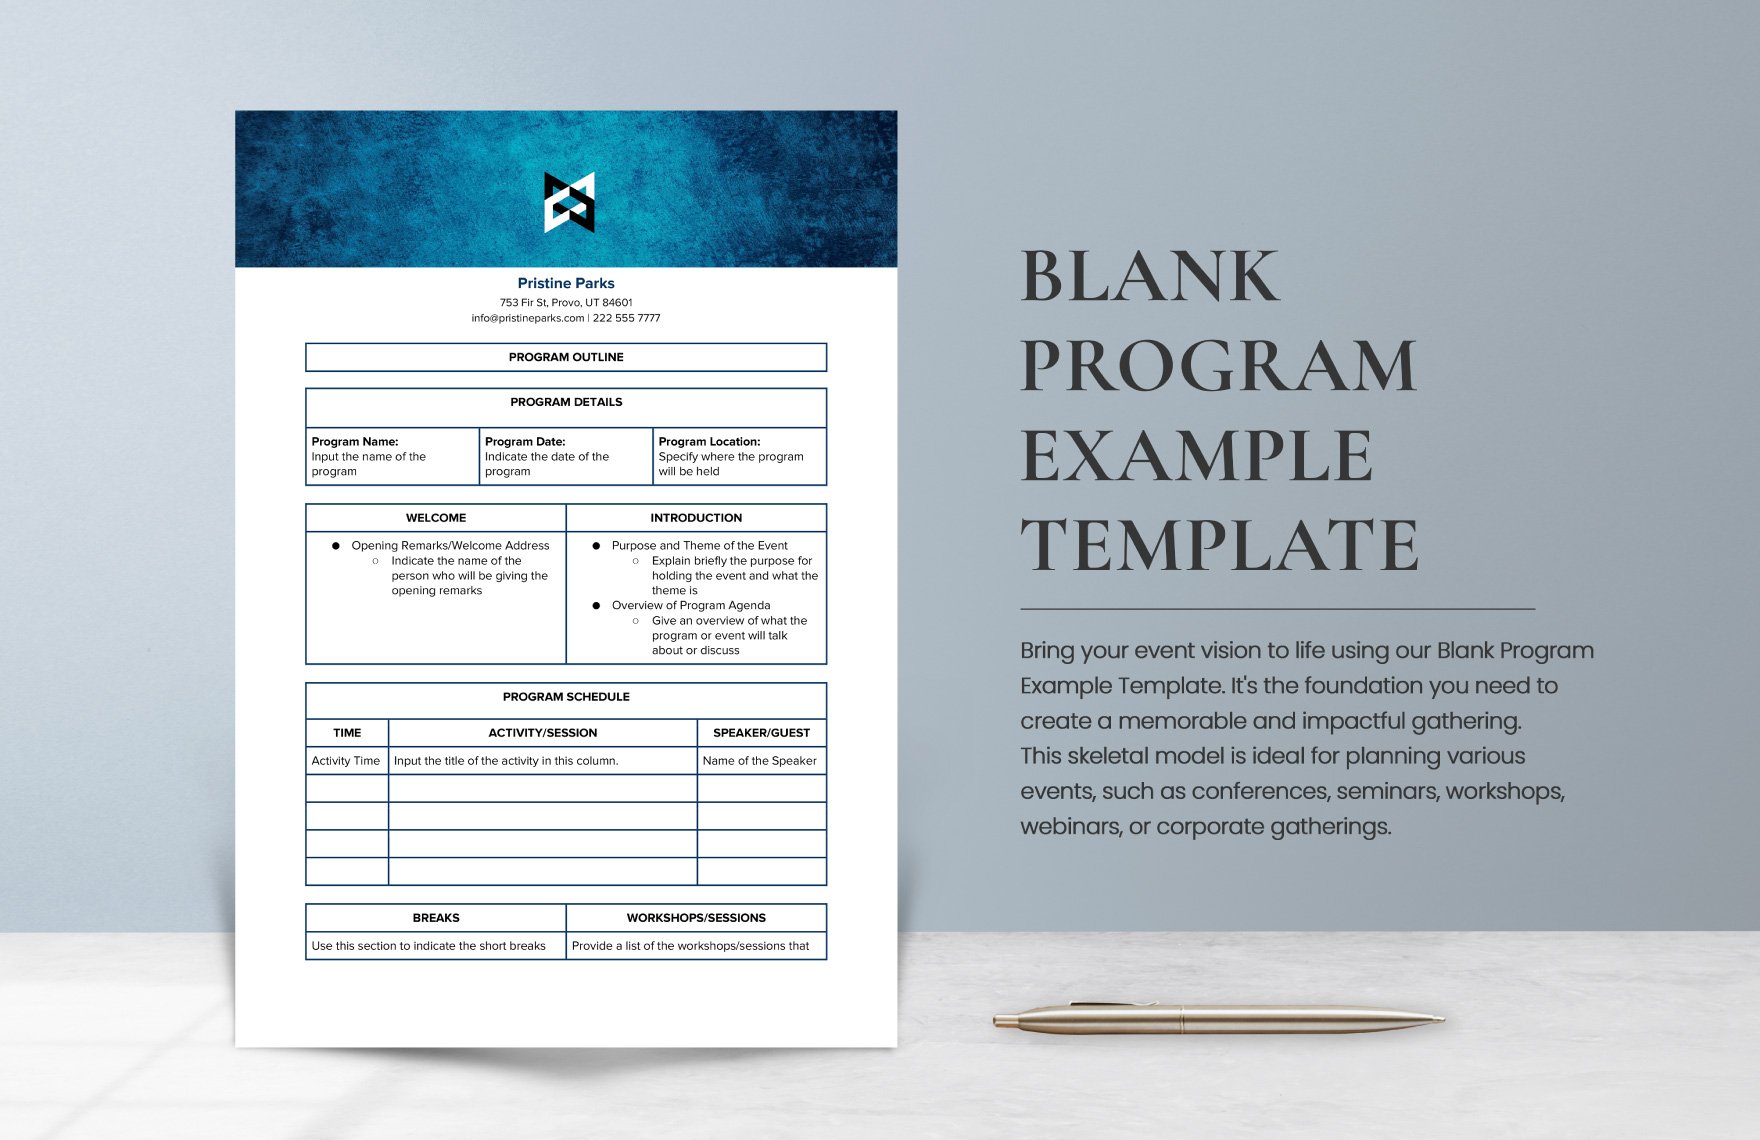 Free Blank Program Example Template